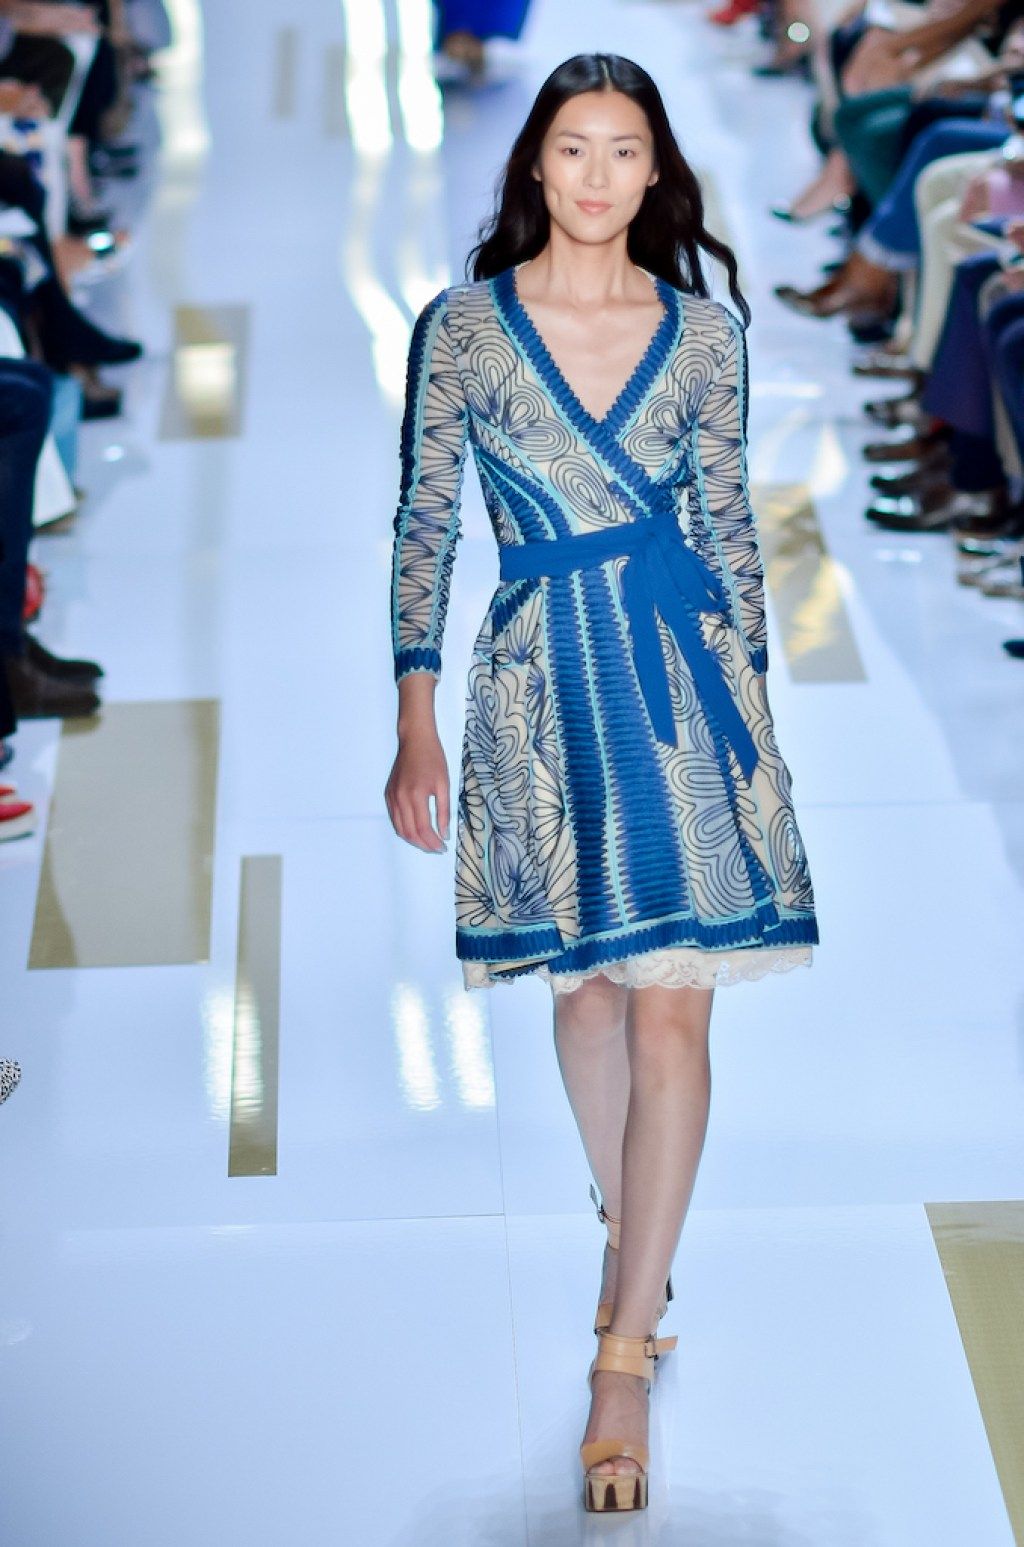 Wrap-mekko Diane Von Furstenbergin vaatteet, jotka muuttivat kulttuuria